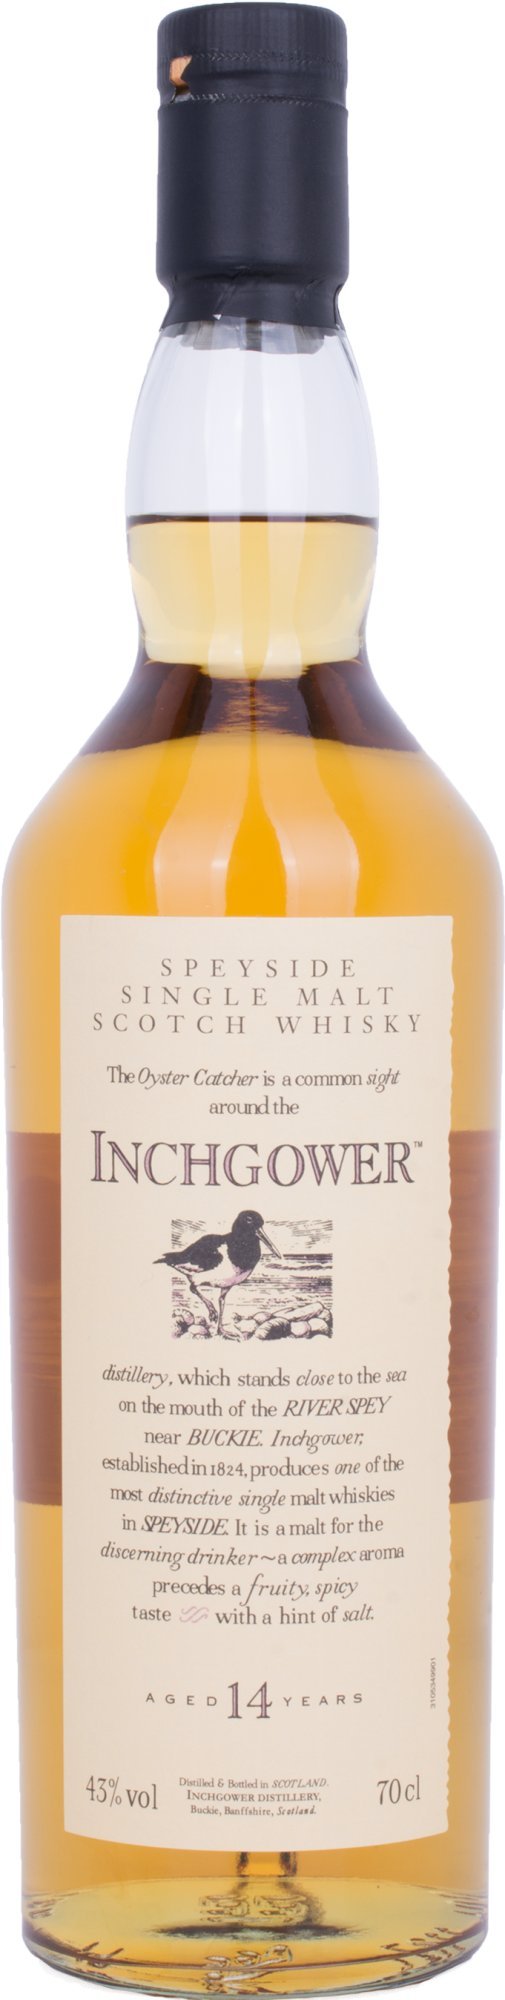 Tendance  Inchgower Speyside 14 Ans Flora/Fauna Single Malt Whisky 700 ml RCrHptRVQ en ligne